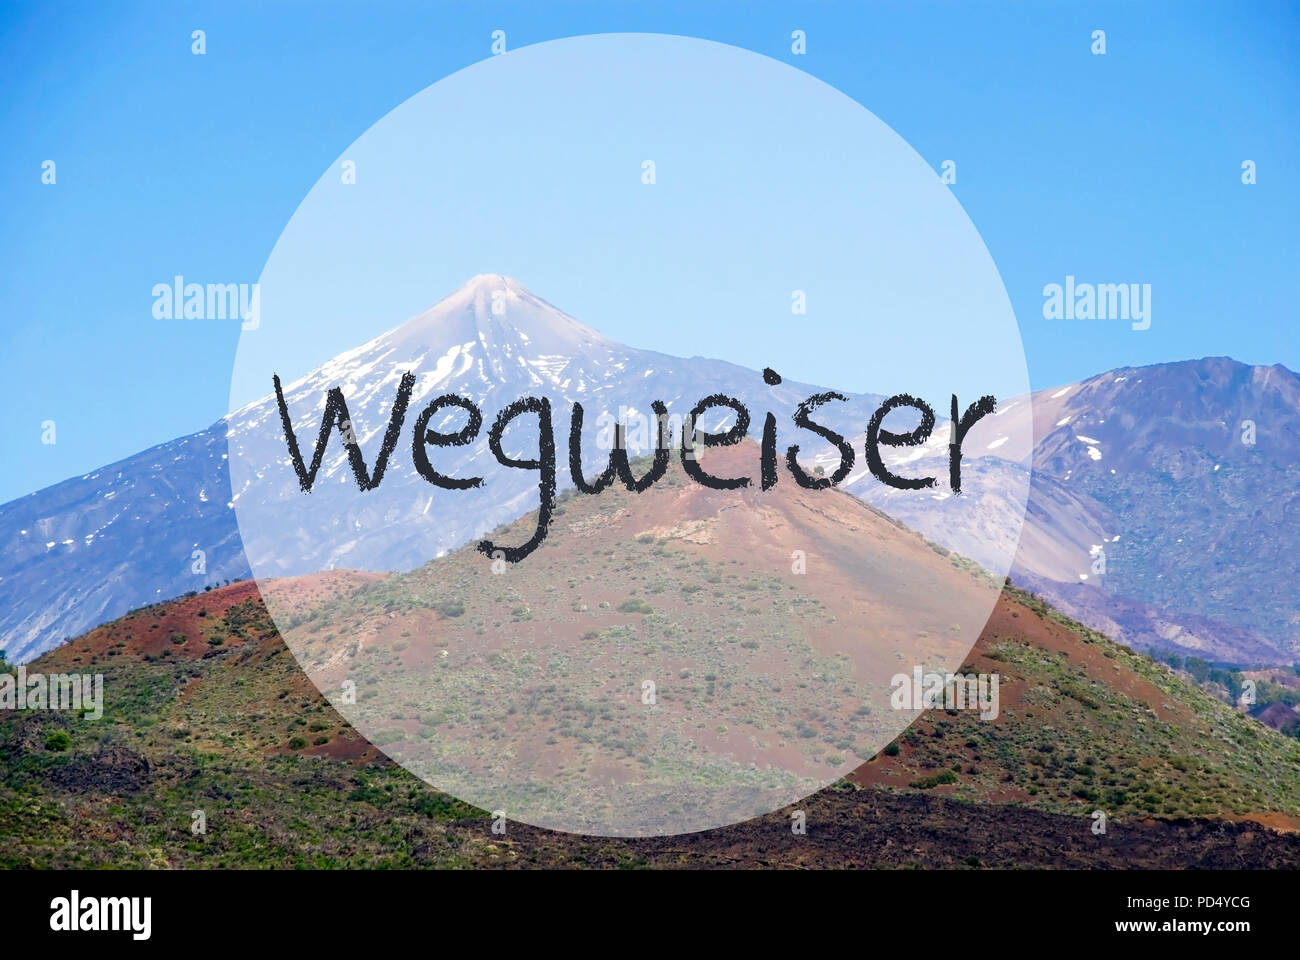 Vulcano Mountain, Wegweiser Means Guidepost Stock Photo